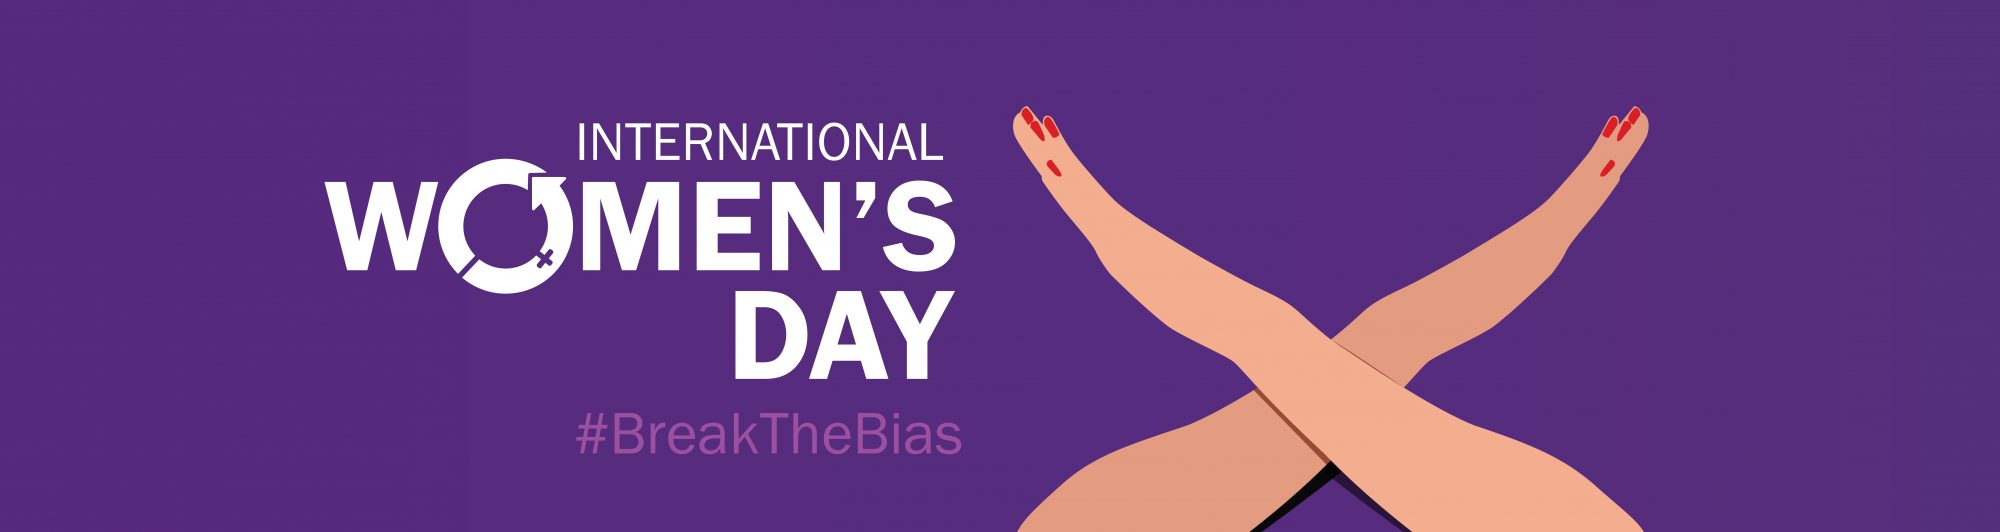 international women's day banner with break the bias hashtag